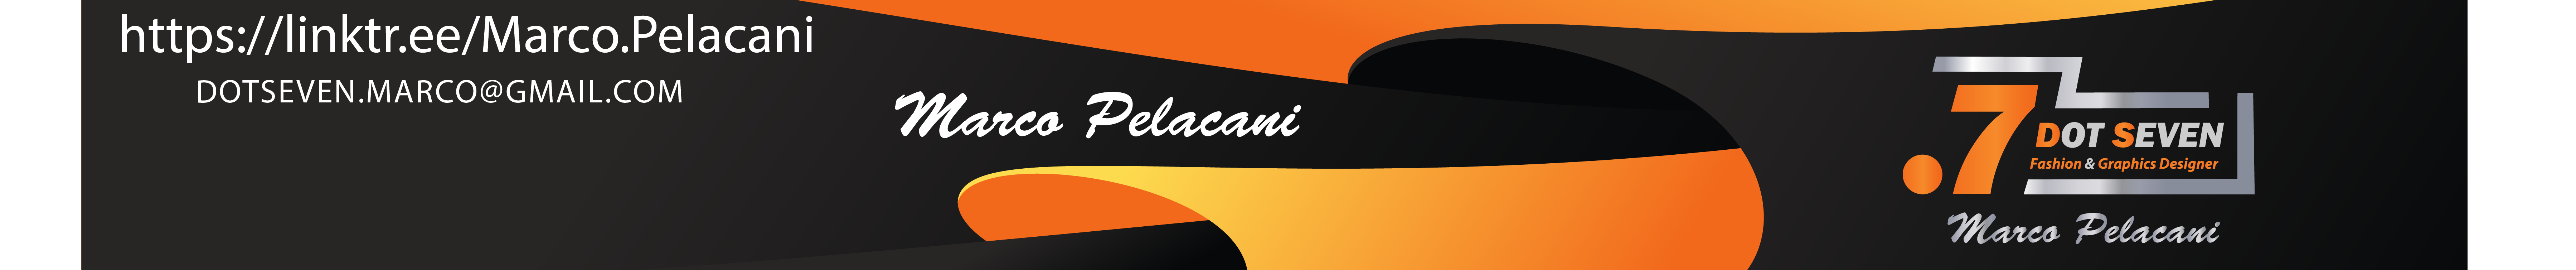 Marco Pelacani's profile banner